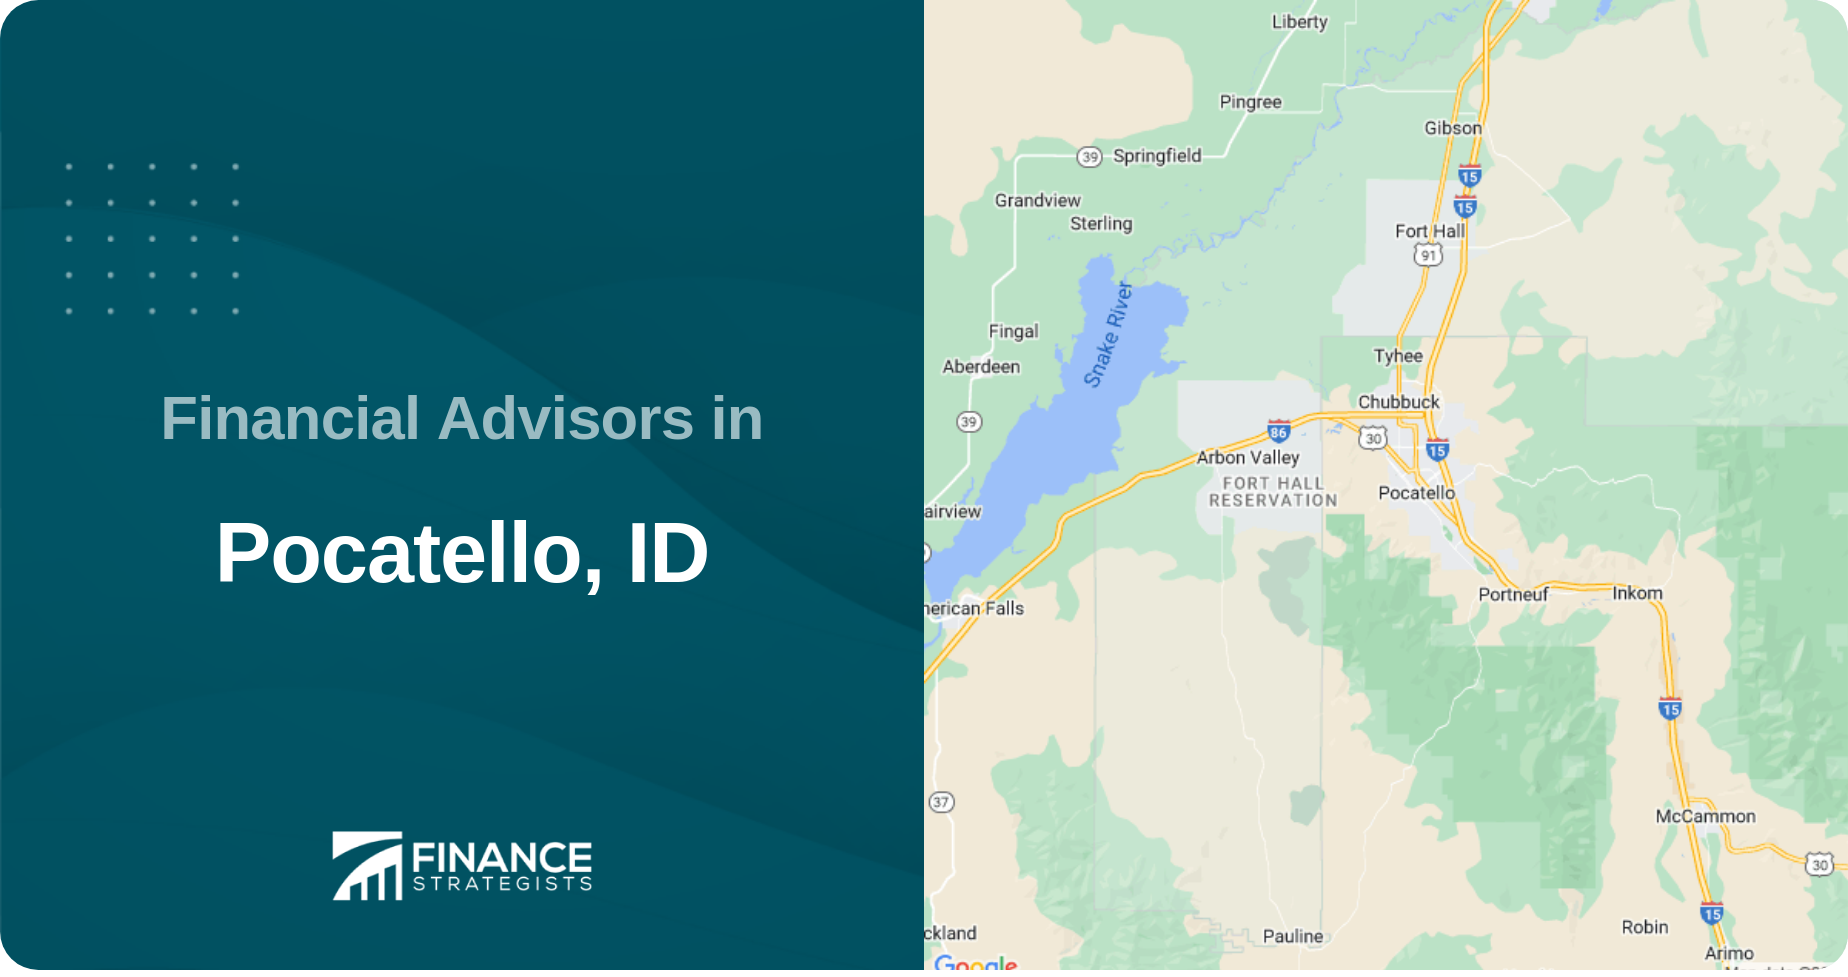 Financial Advisors in Pocatello, ID